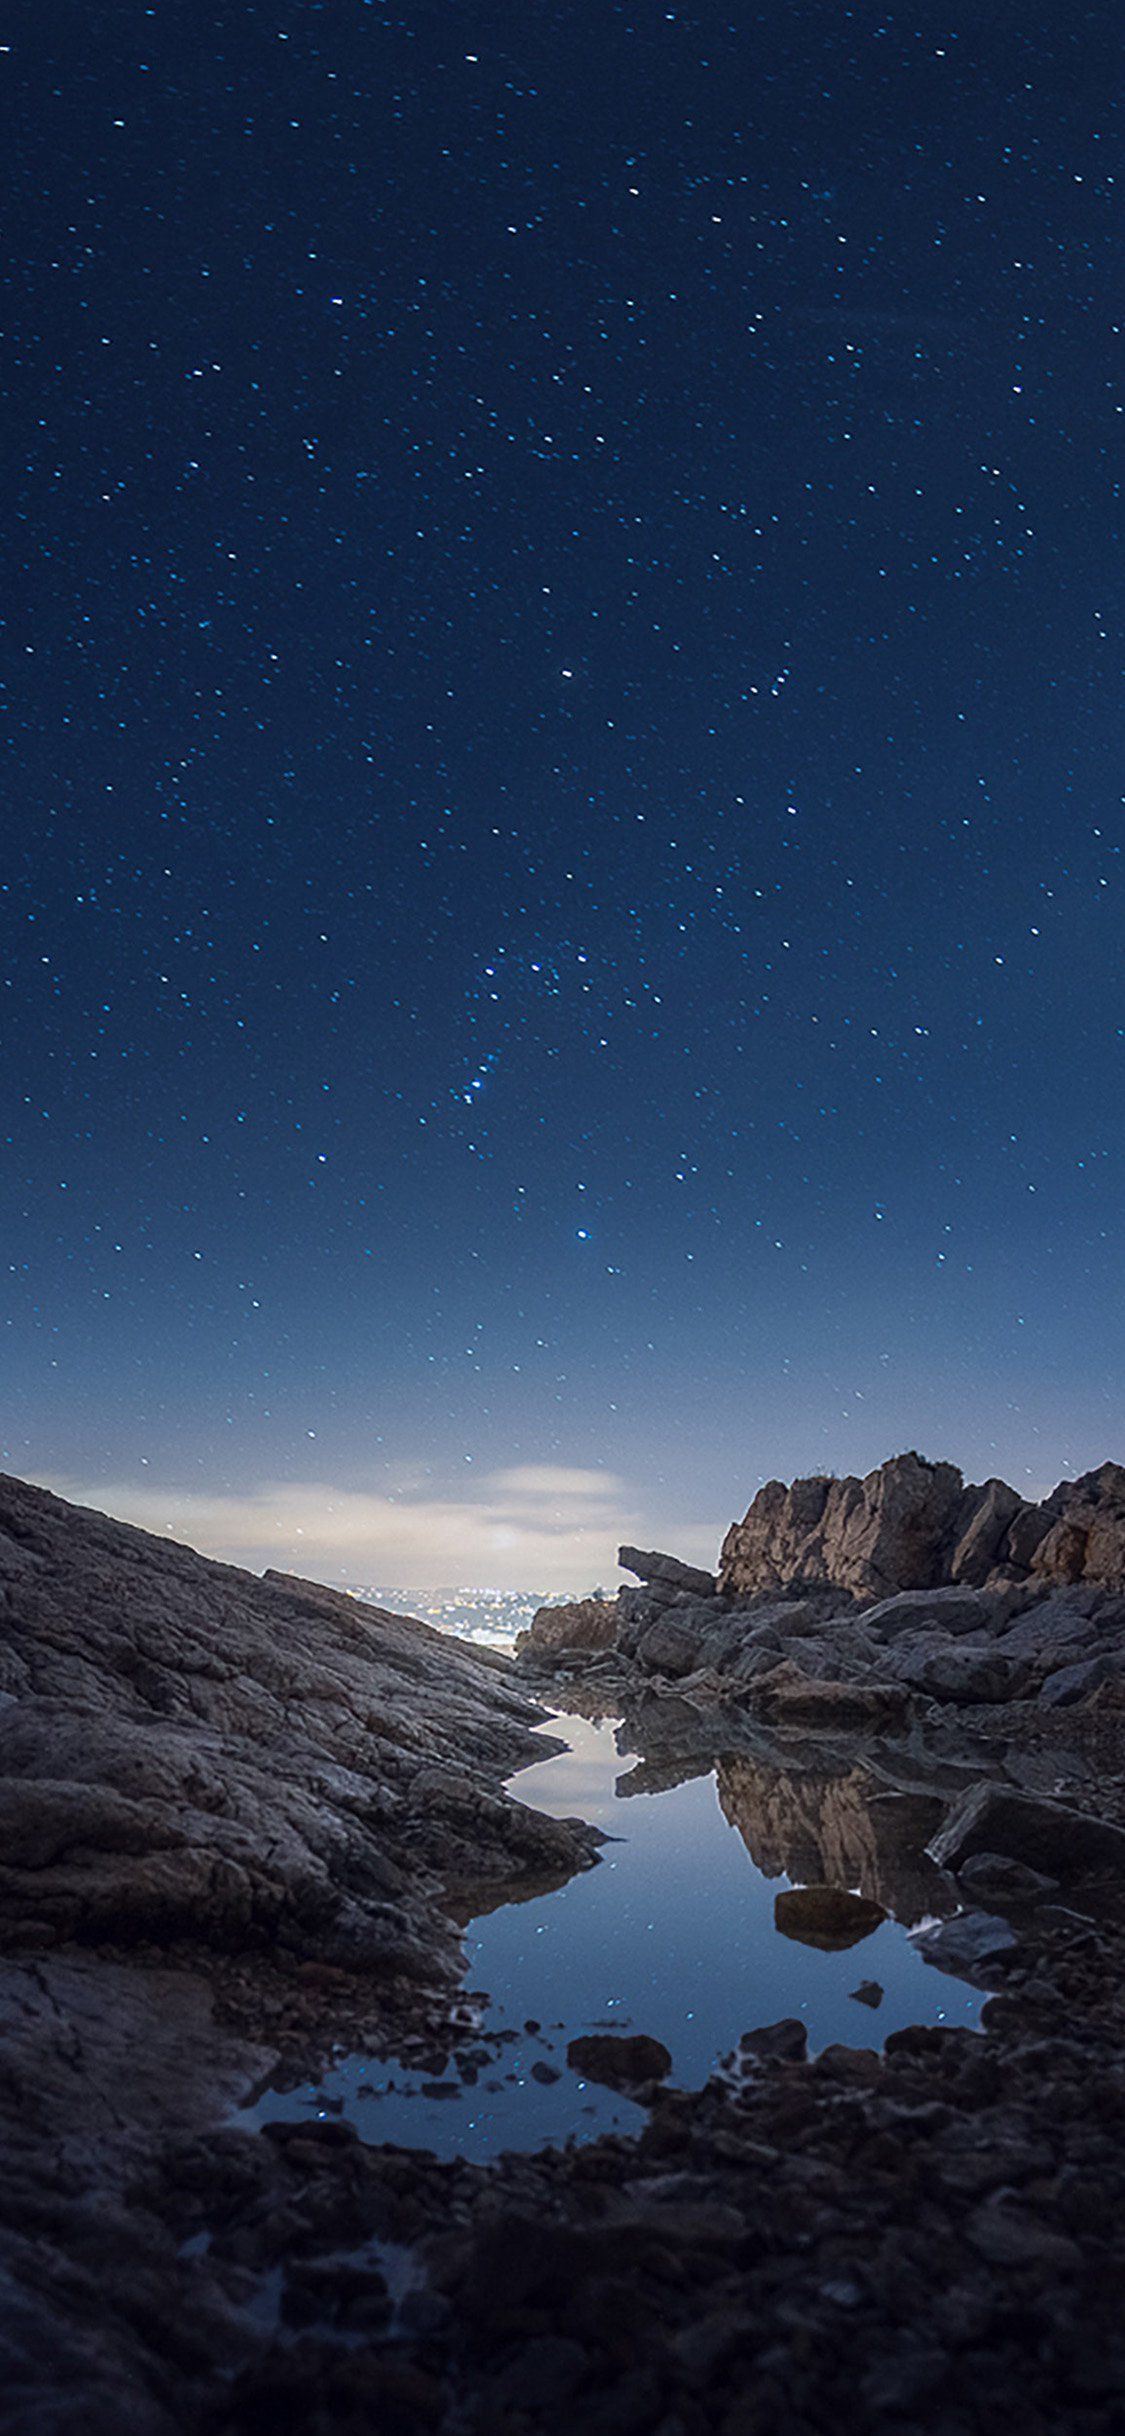 Sky, star , rock , mountain background. Night sky wallpaper, Nature iphone wallpaper, Nature wallpaper